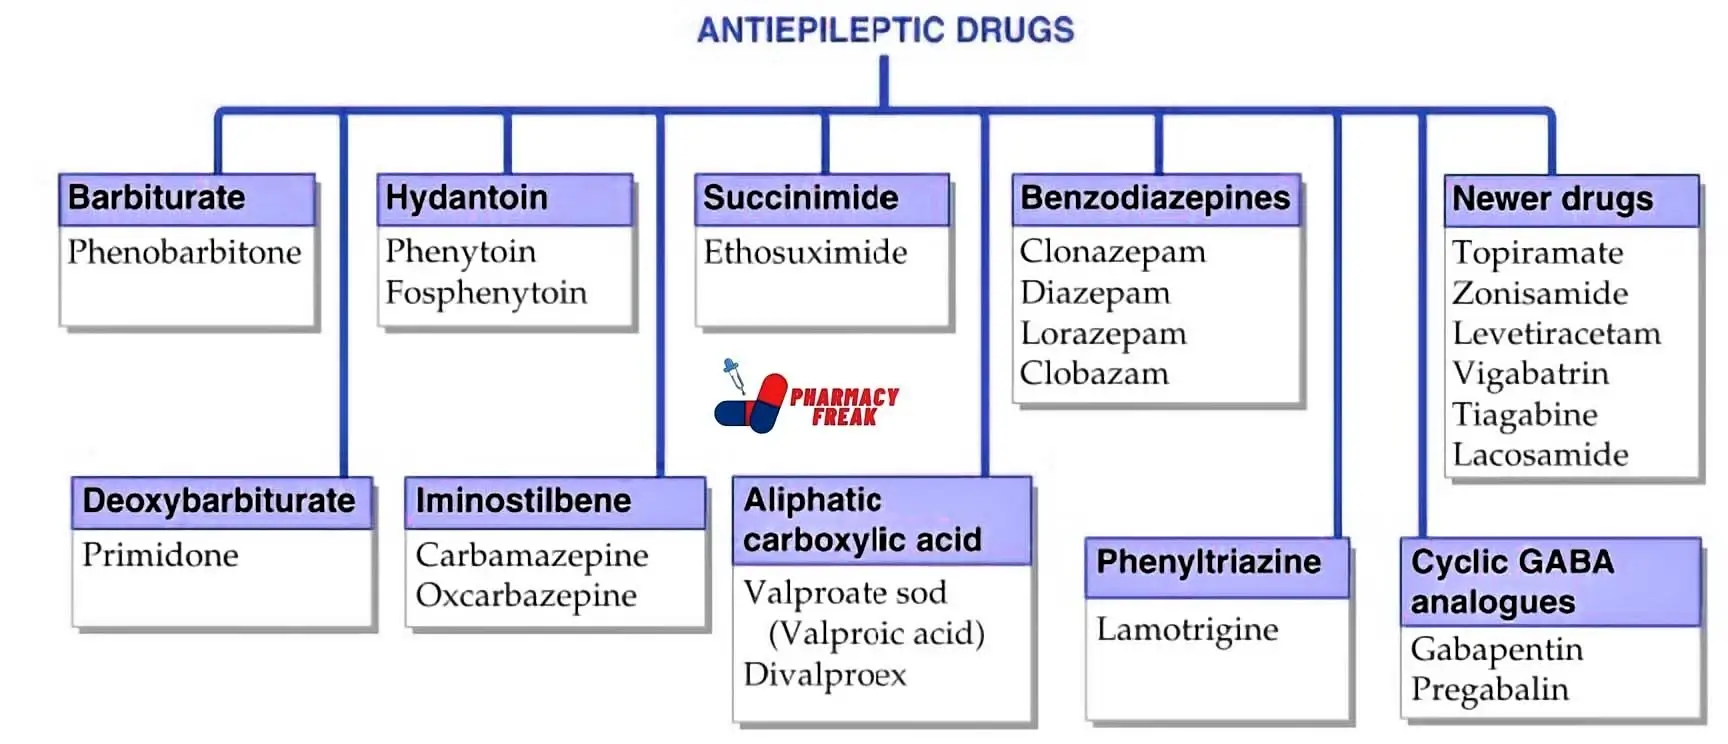 Classification of Antiepileptic Drugs